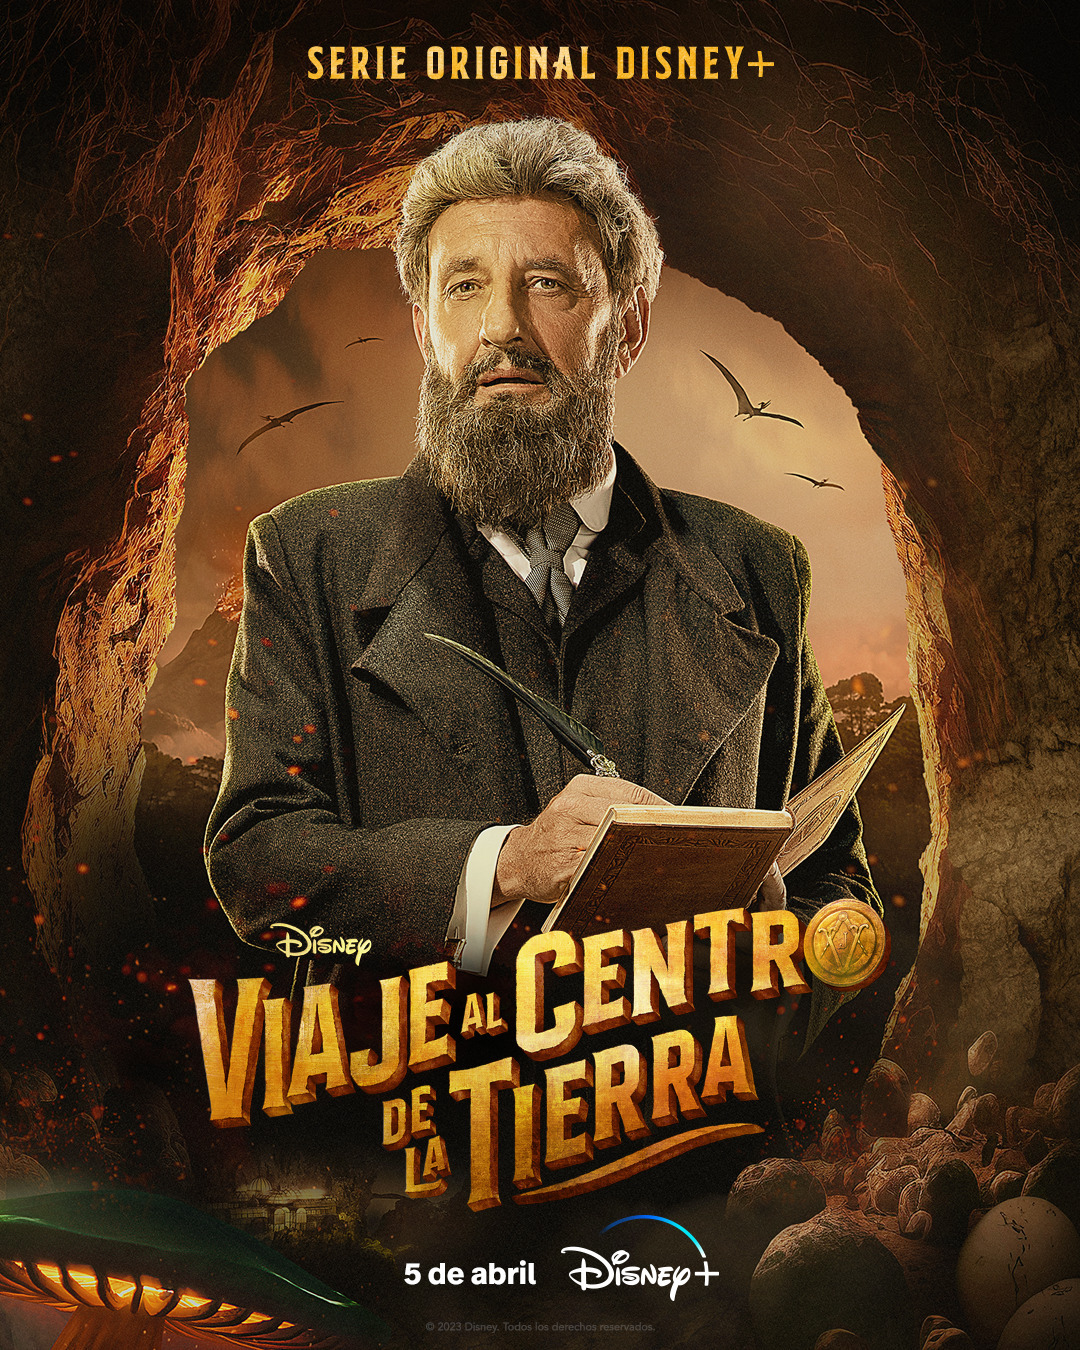 Extra Large TV Poster Image for Viaje al centro de la tierra (#7 of 8)